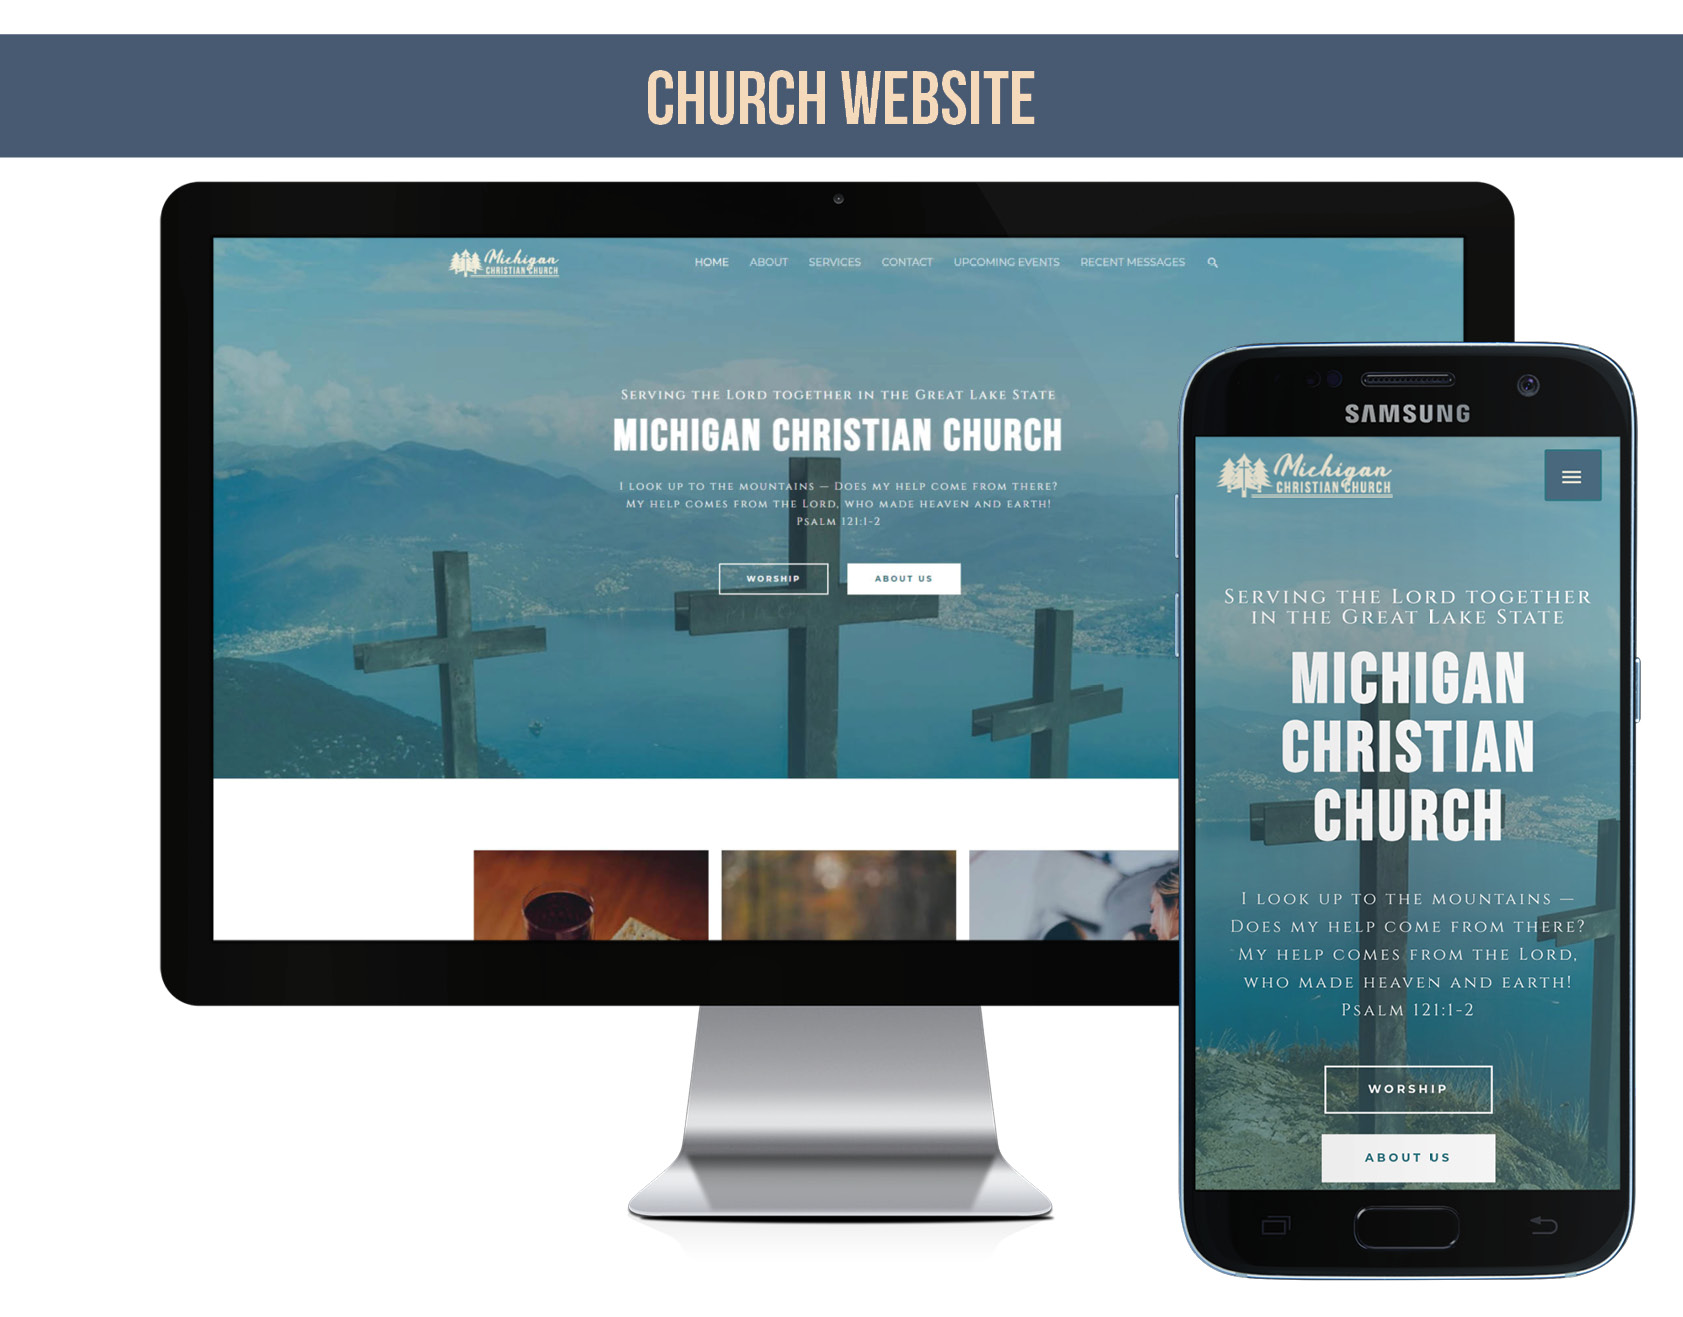 Sample church website in my design portfolio